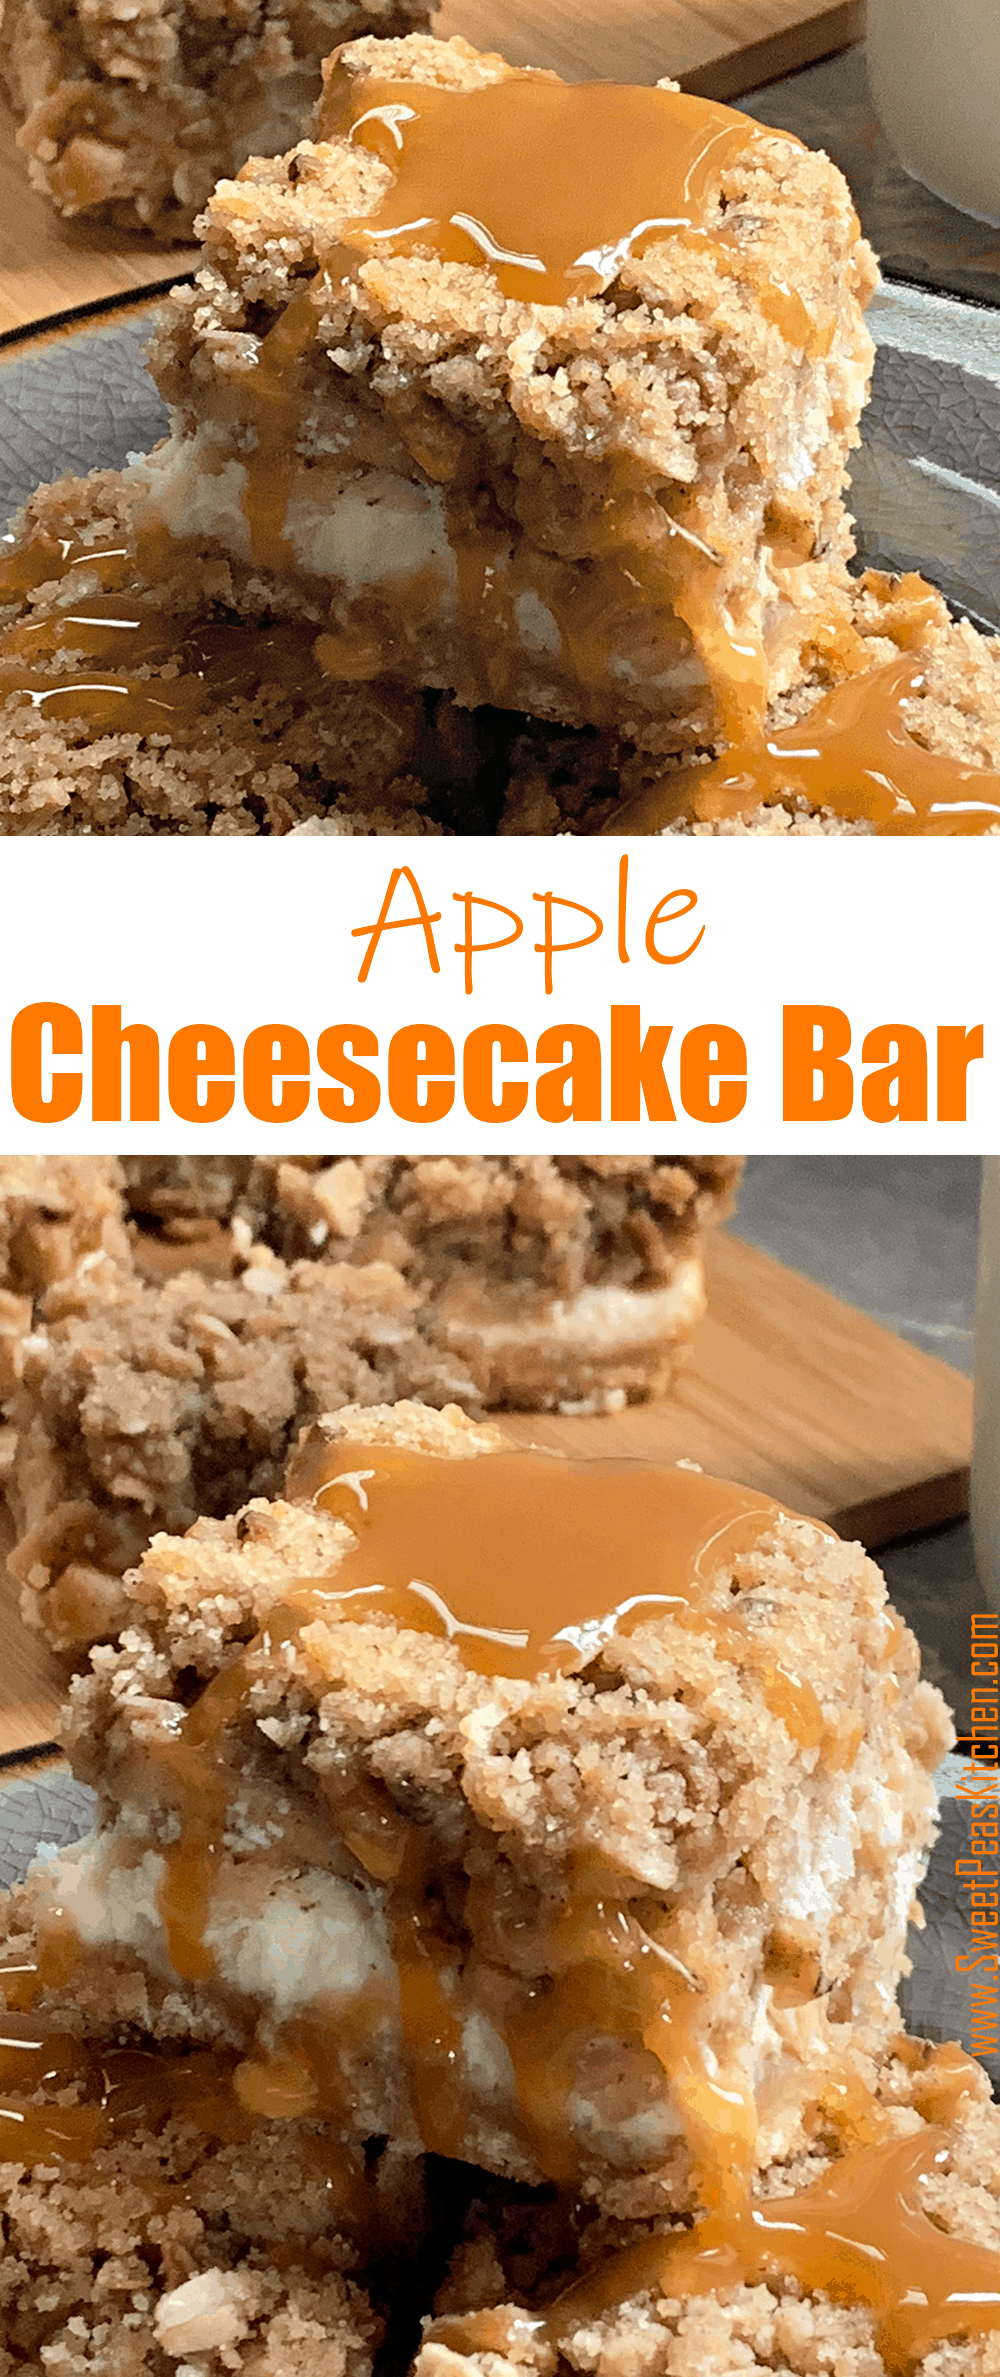 Apple Cheesecake Bar